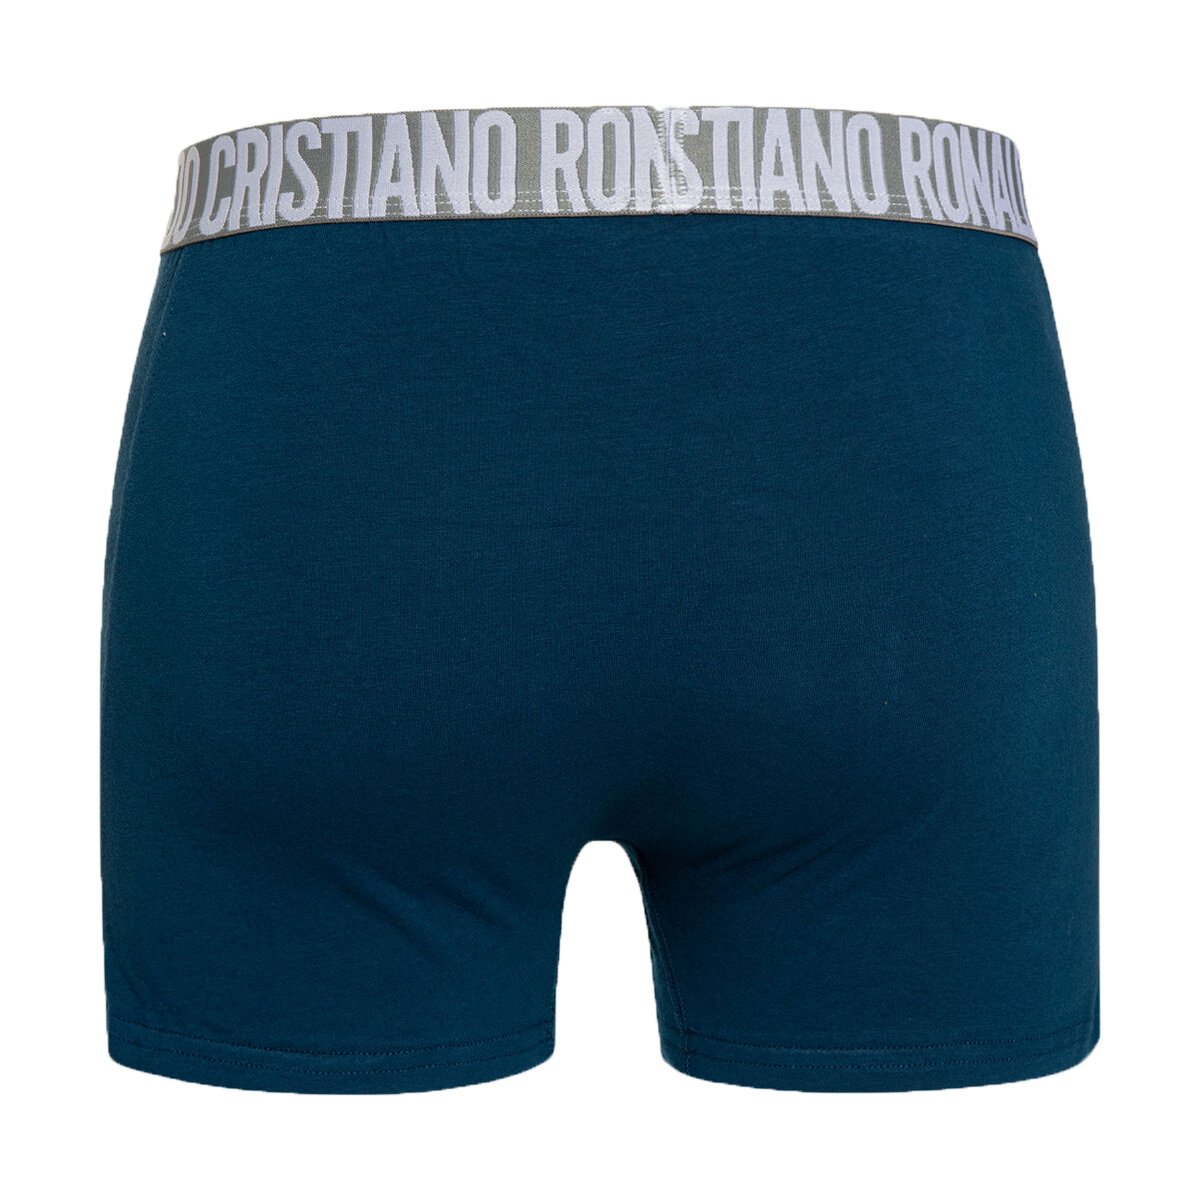 CR7 Mens Boxers Cristiano Ronaldo Big Letters 3 Pack Breathable Cotton ...